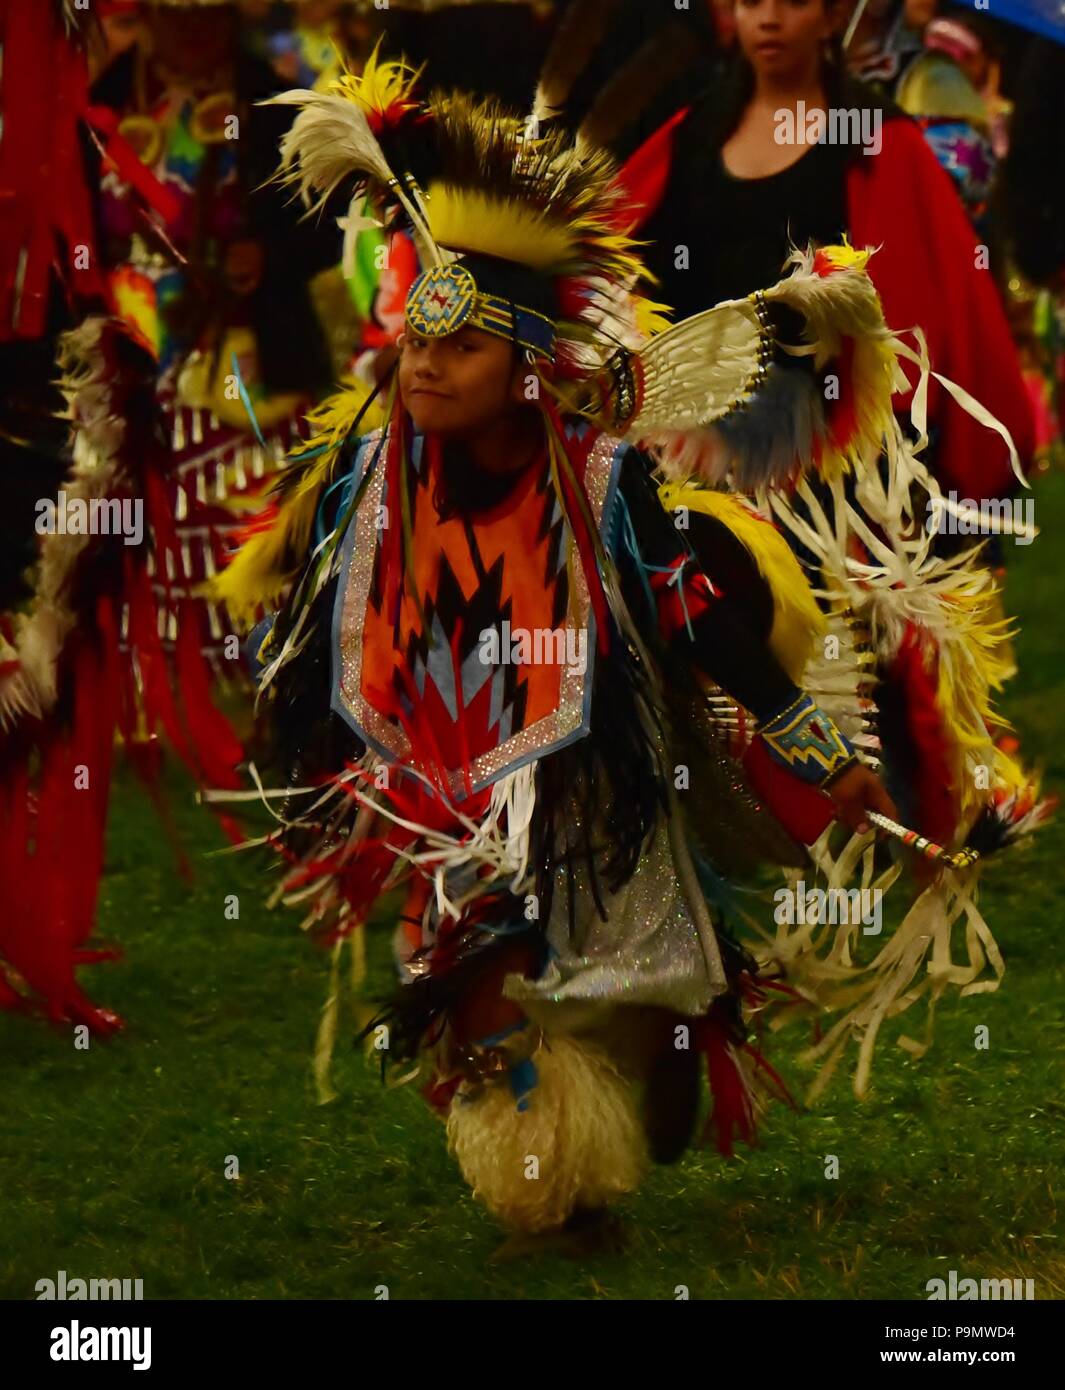 American Indian Festival Pow wow dancer Stock Photo